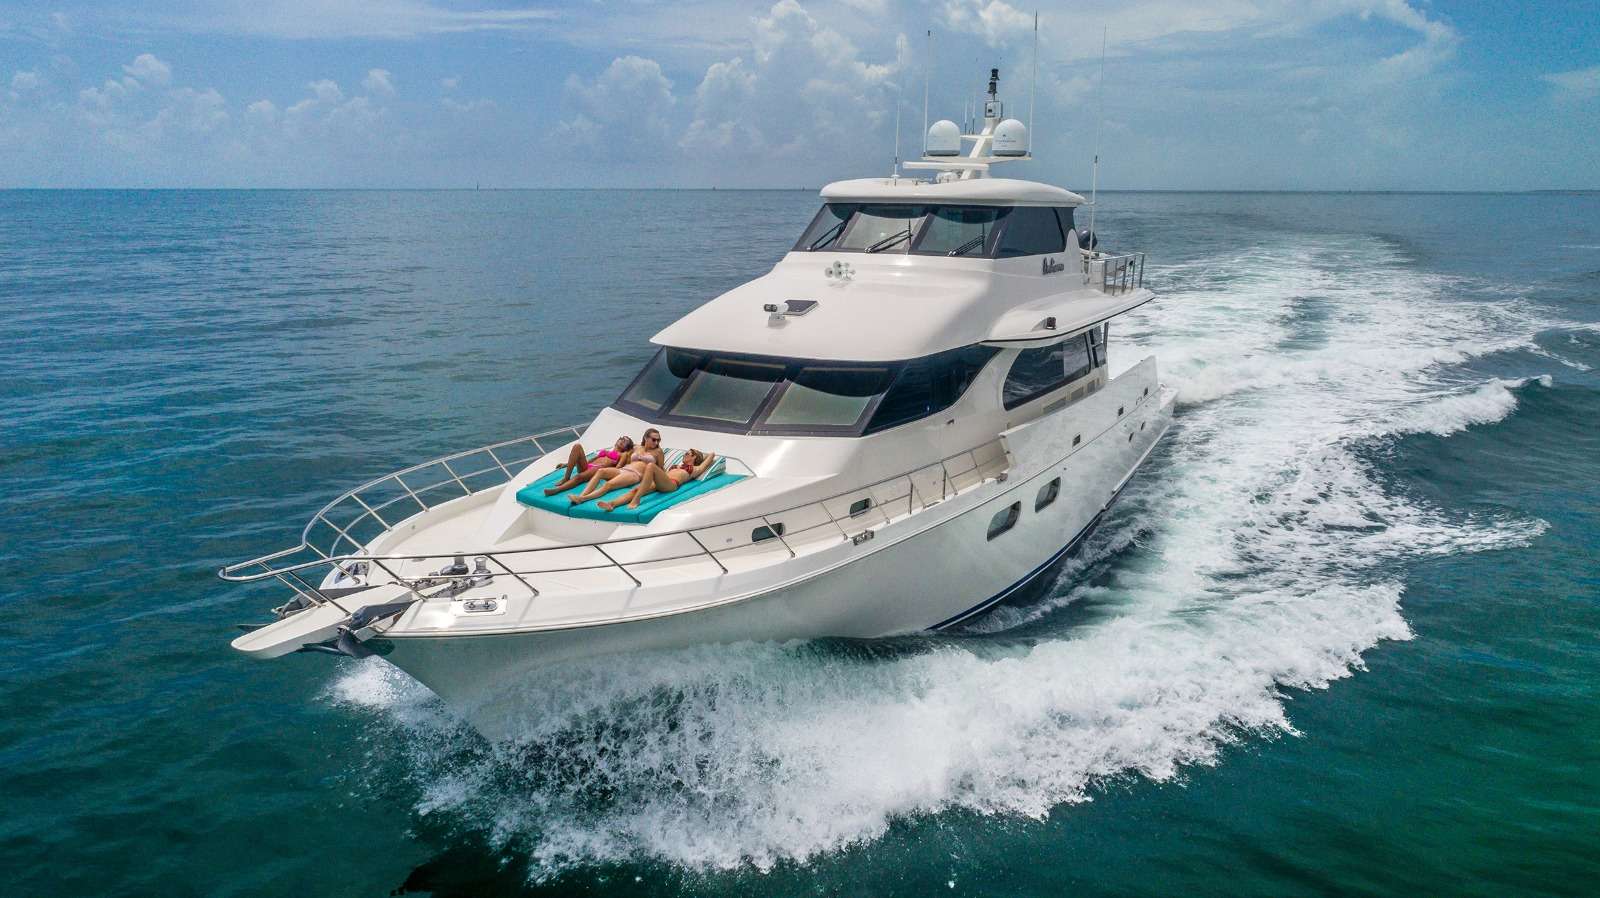 ANDIAMO - Motor Boat Charter USA & Boat hire in Florida & Bahamas 1